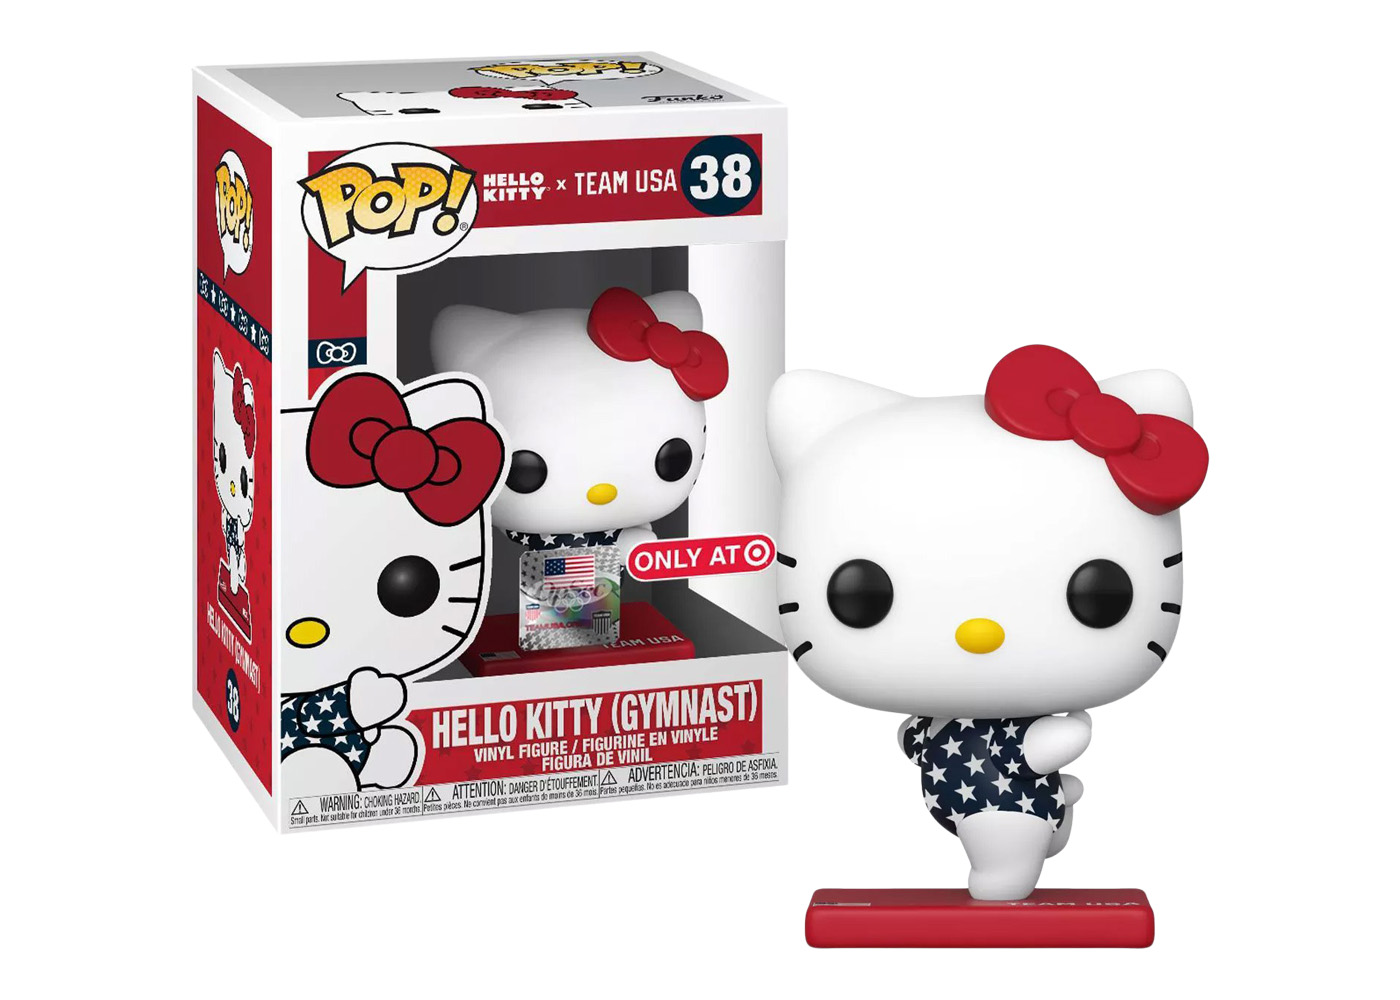 Funko Pop! Sanrio Team USA Hello Kitty Gymnast Target Exclusive Figure #38